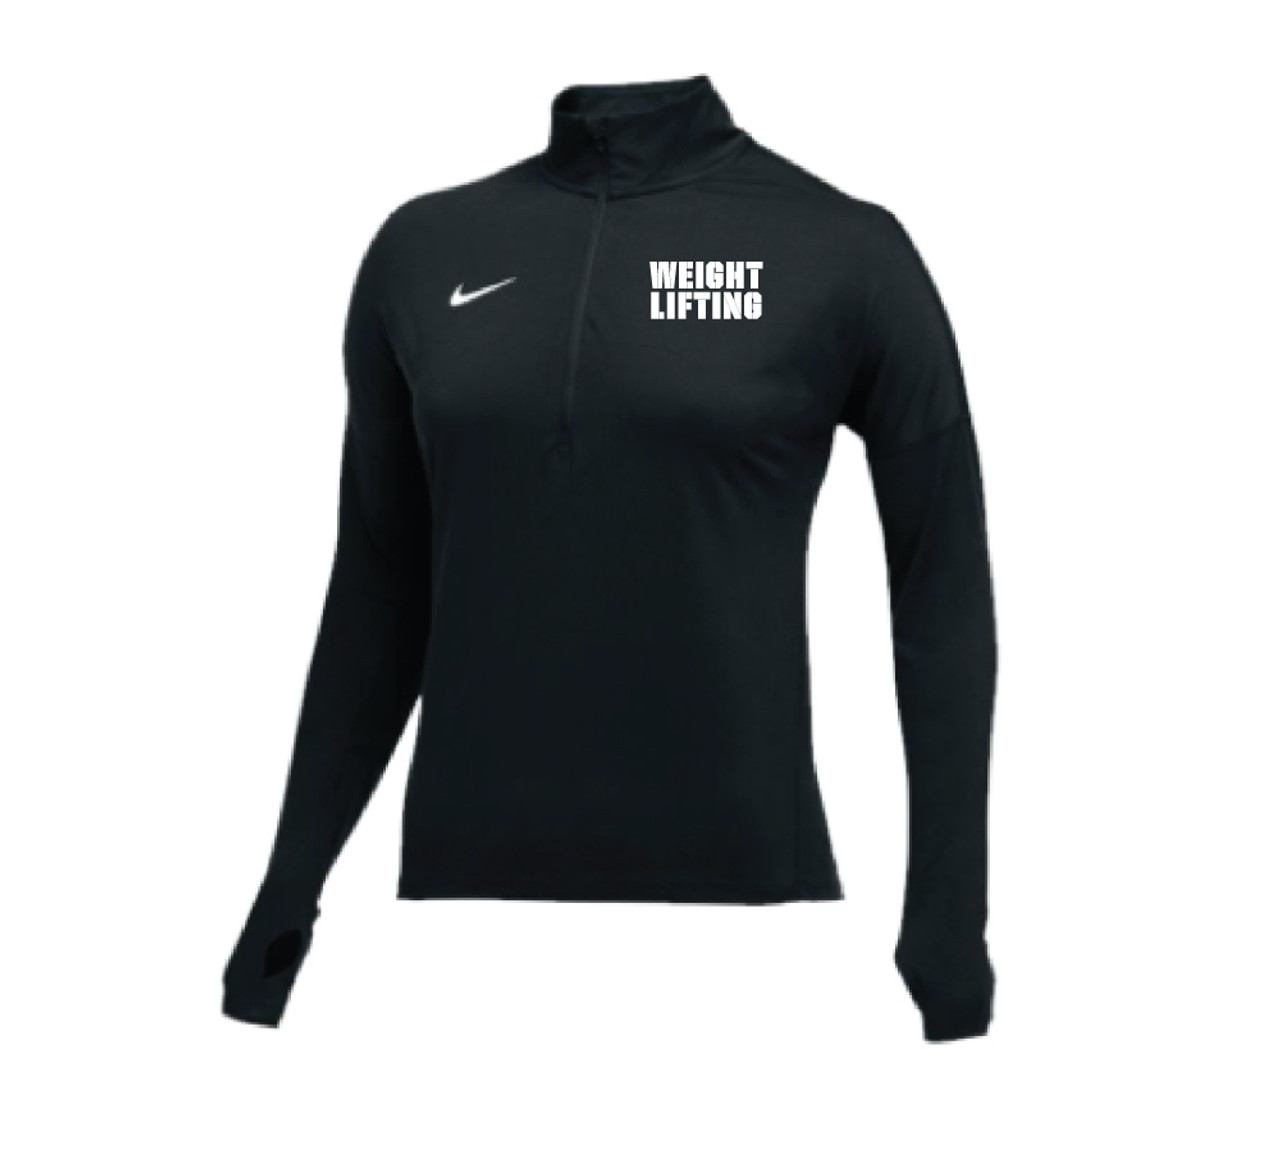 Nike Women's Weightlifting 1/2 Zip Dry Element Top - Black/White